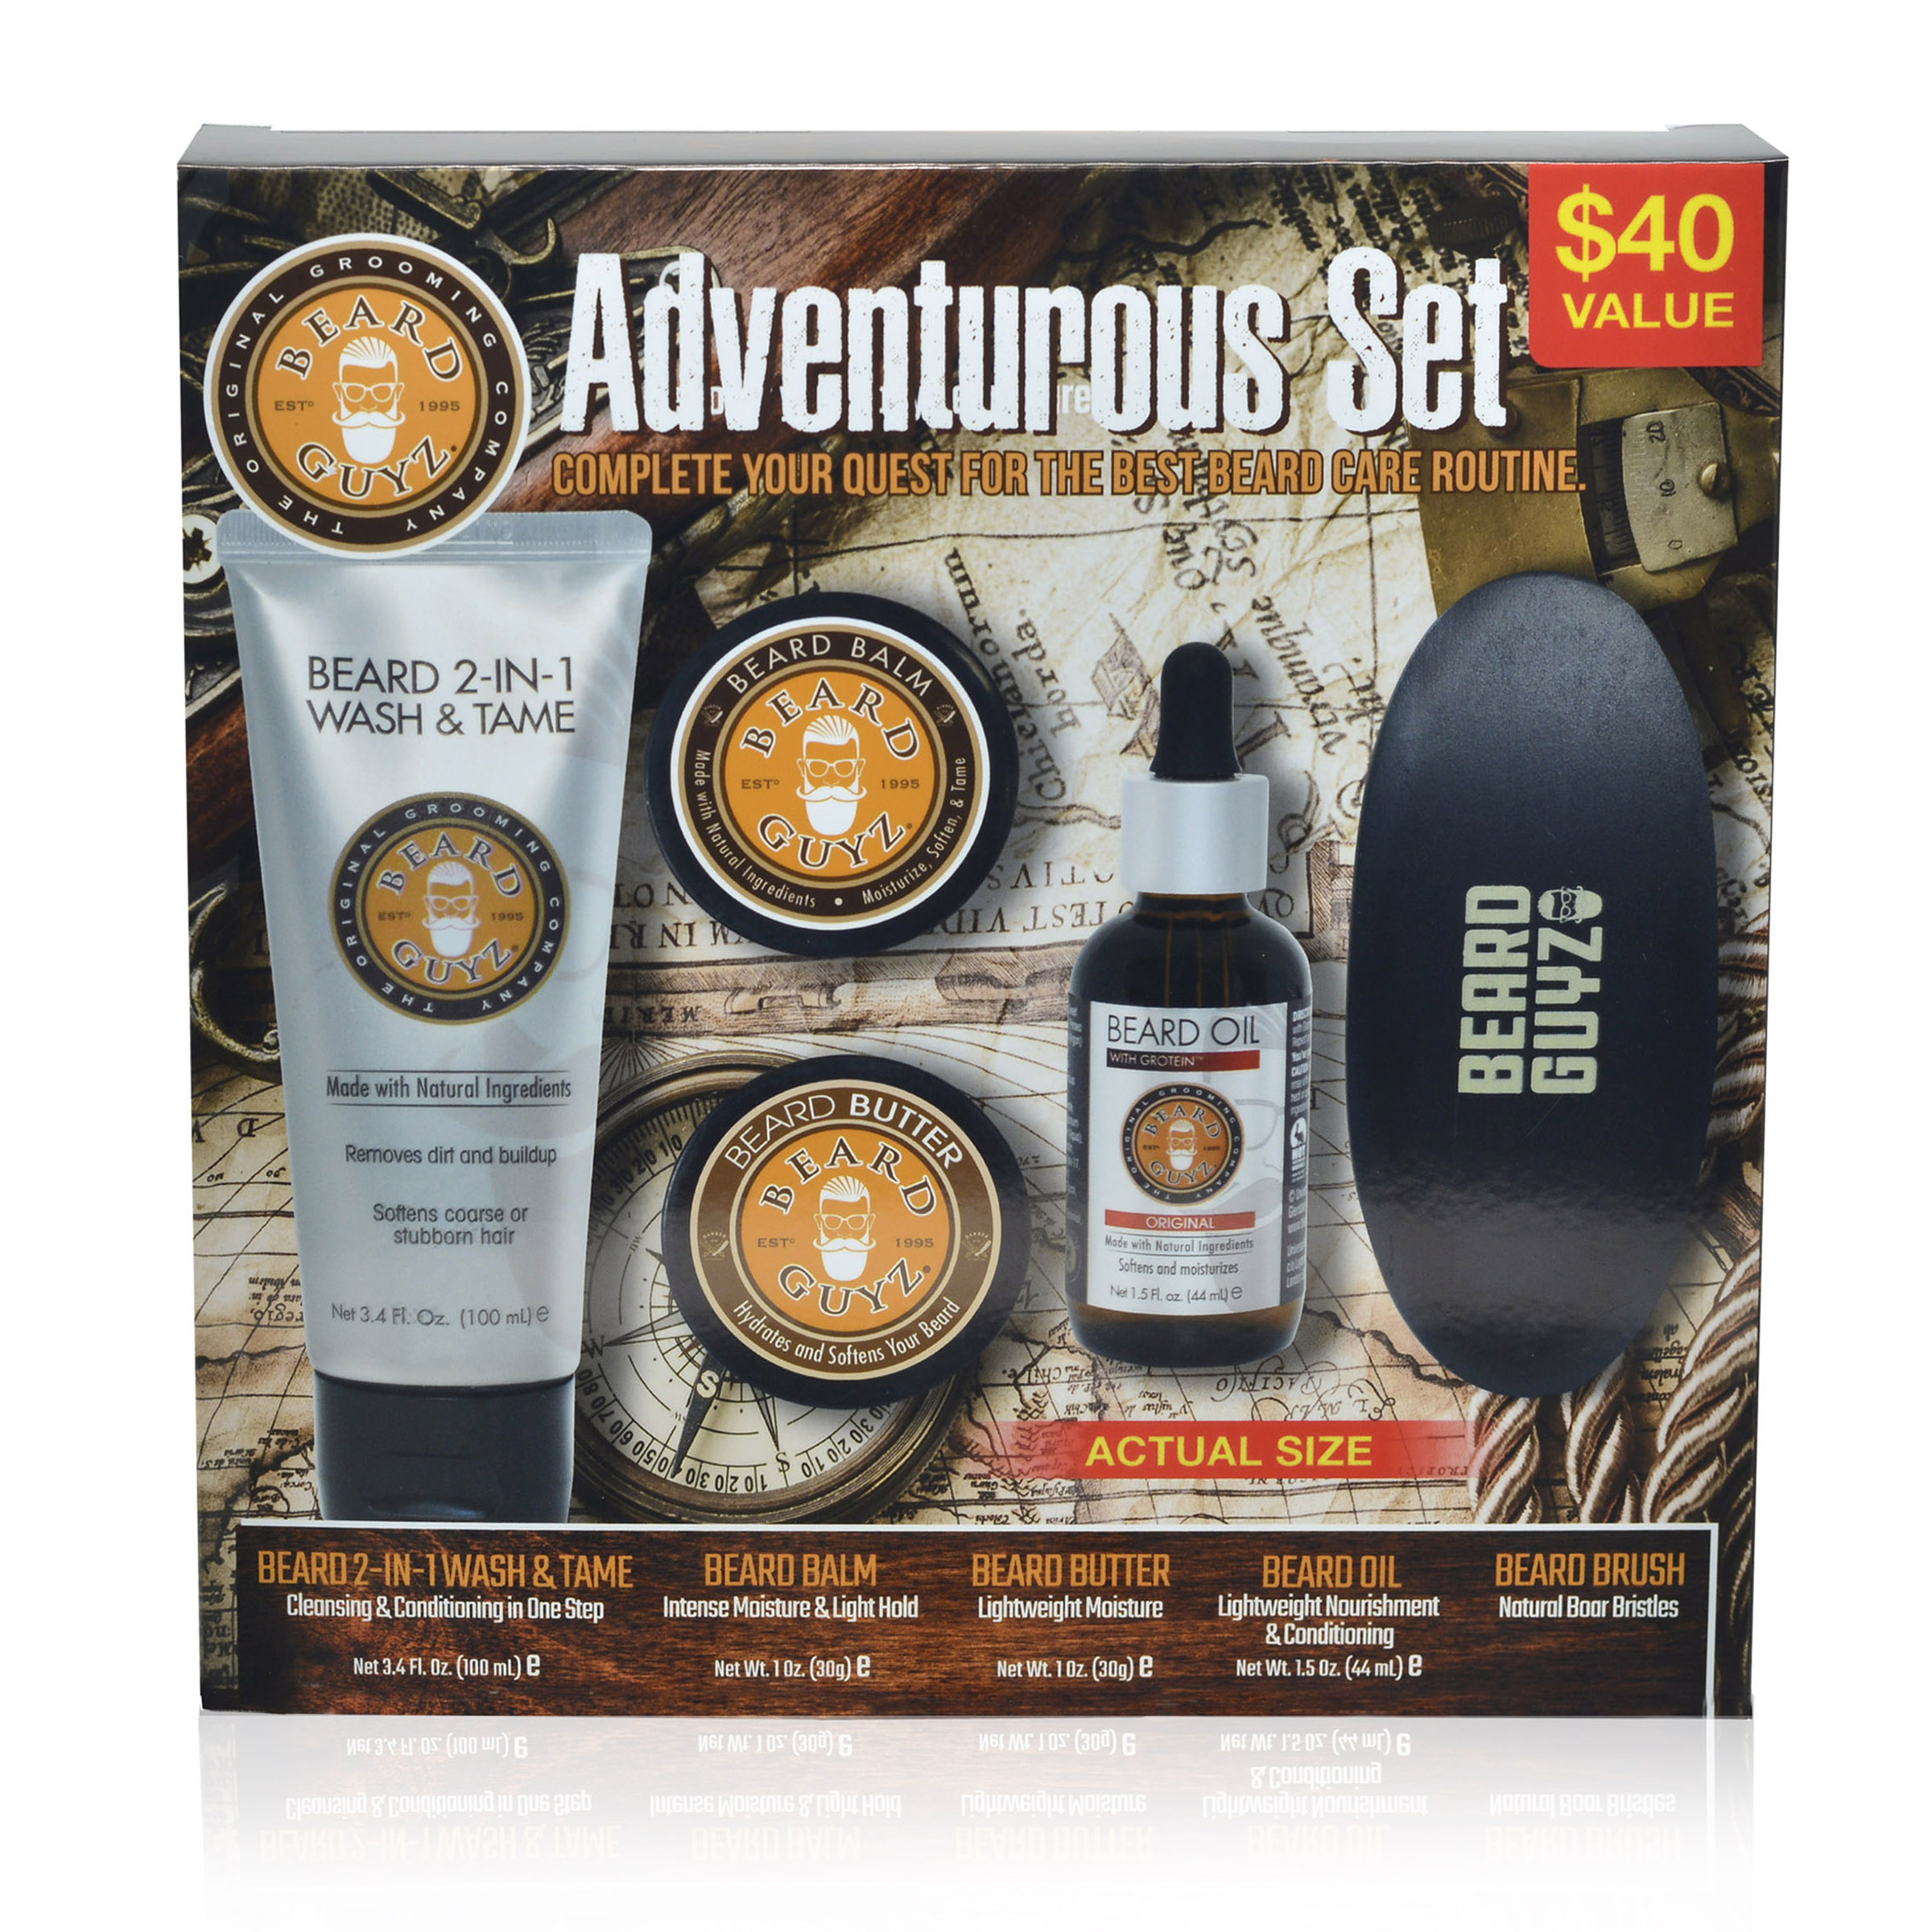 Beard and Adventurous Set | Style Essentials Beard Care Guyz -